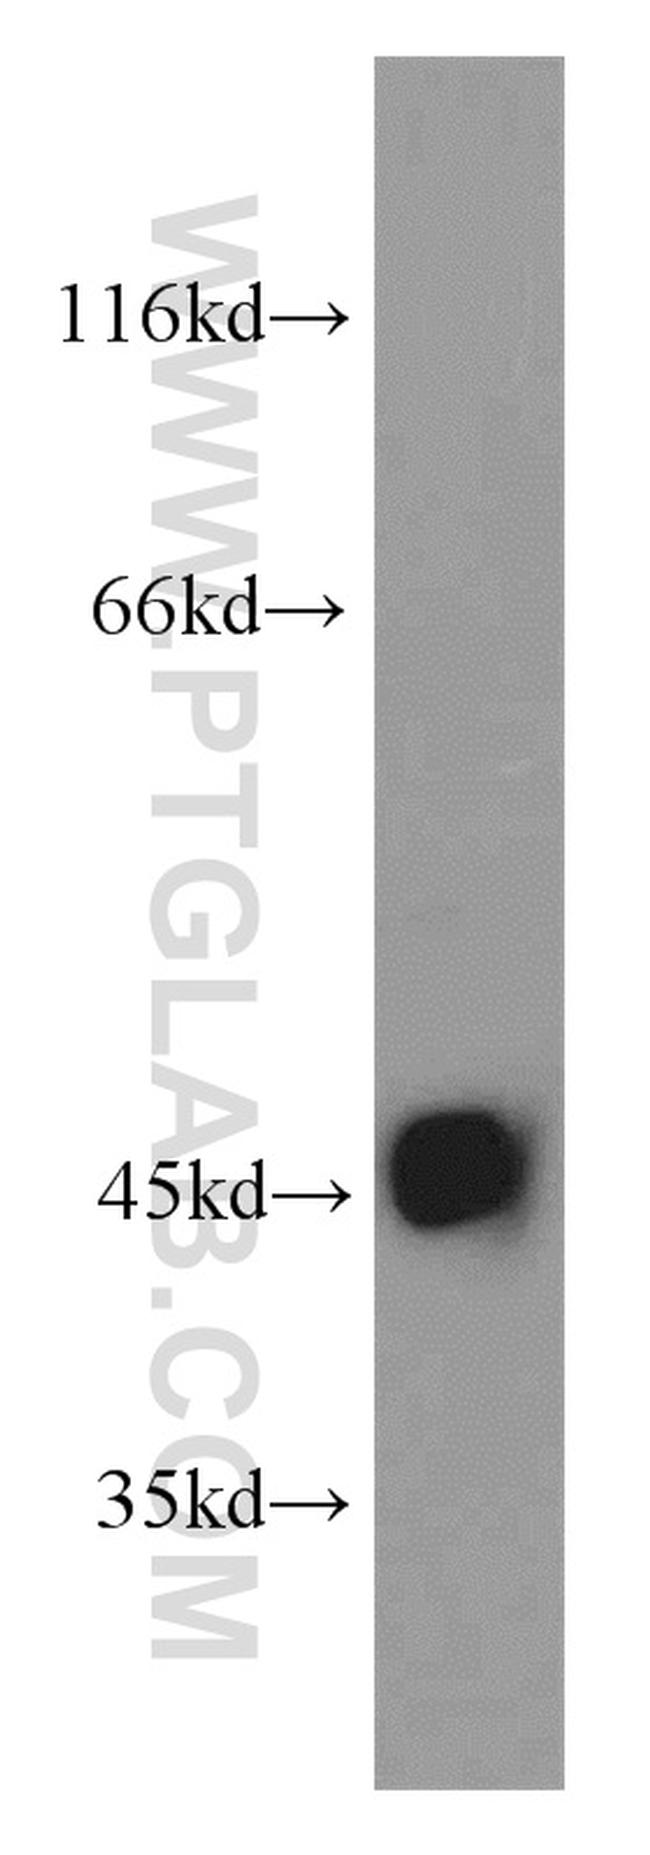 OPRL1 Antibody in Western Blot (WB)